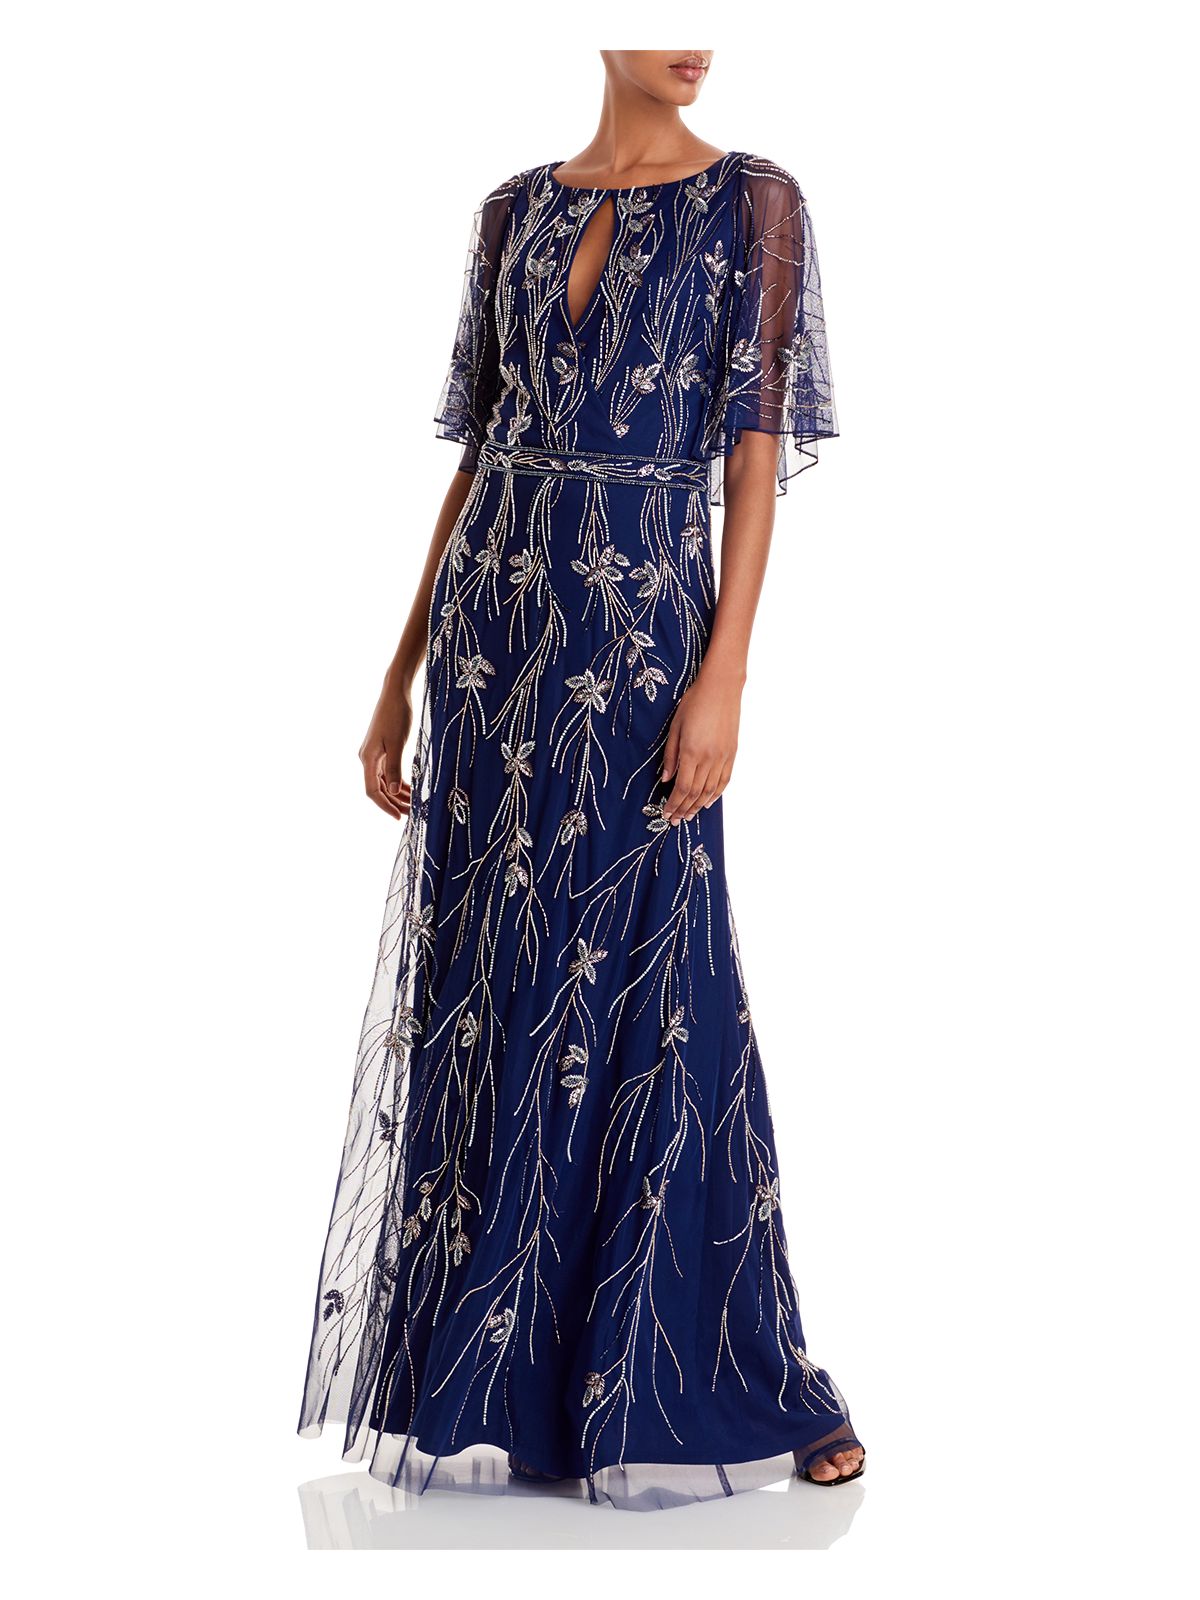 AIDAN MATTOX Womens Embellished W/capelet Sleeveless Keyhole Full-Length Formal Sheath Dress